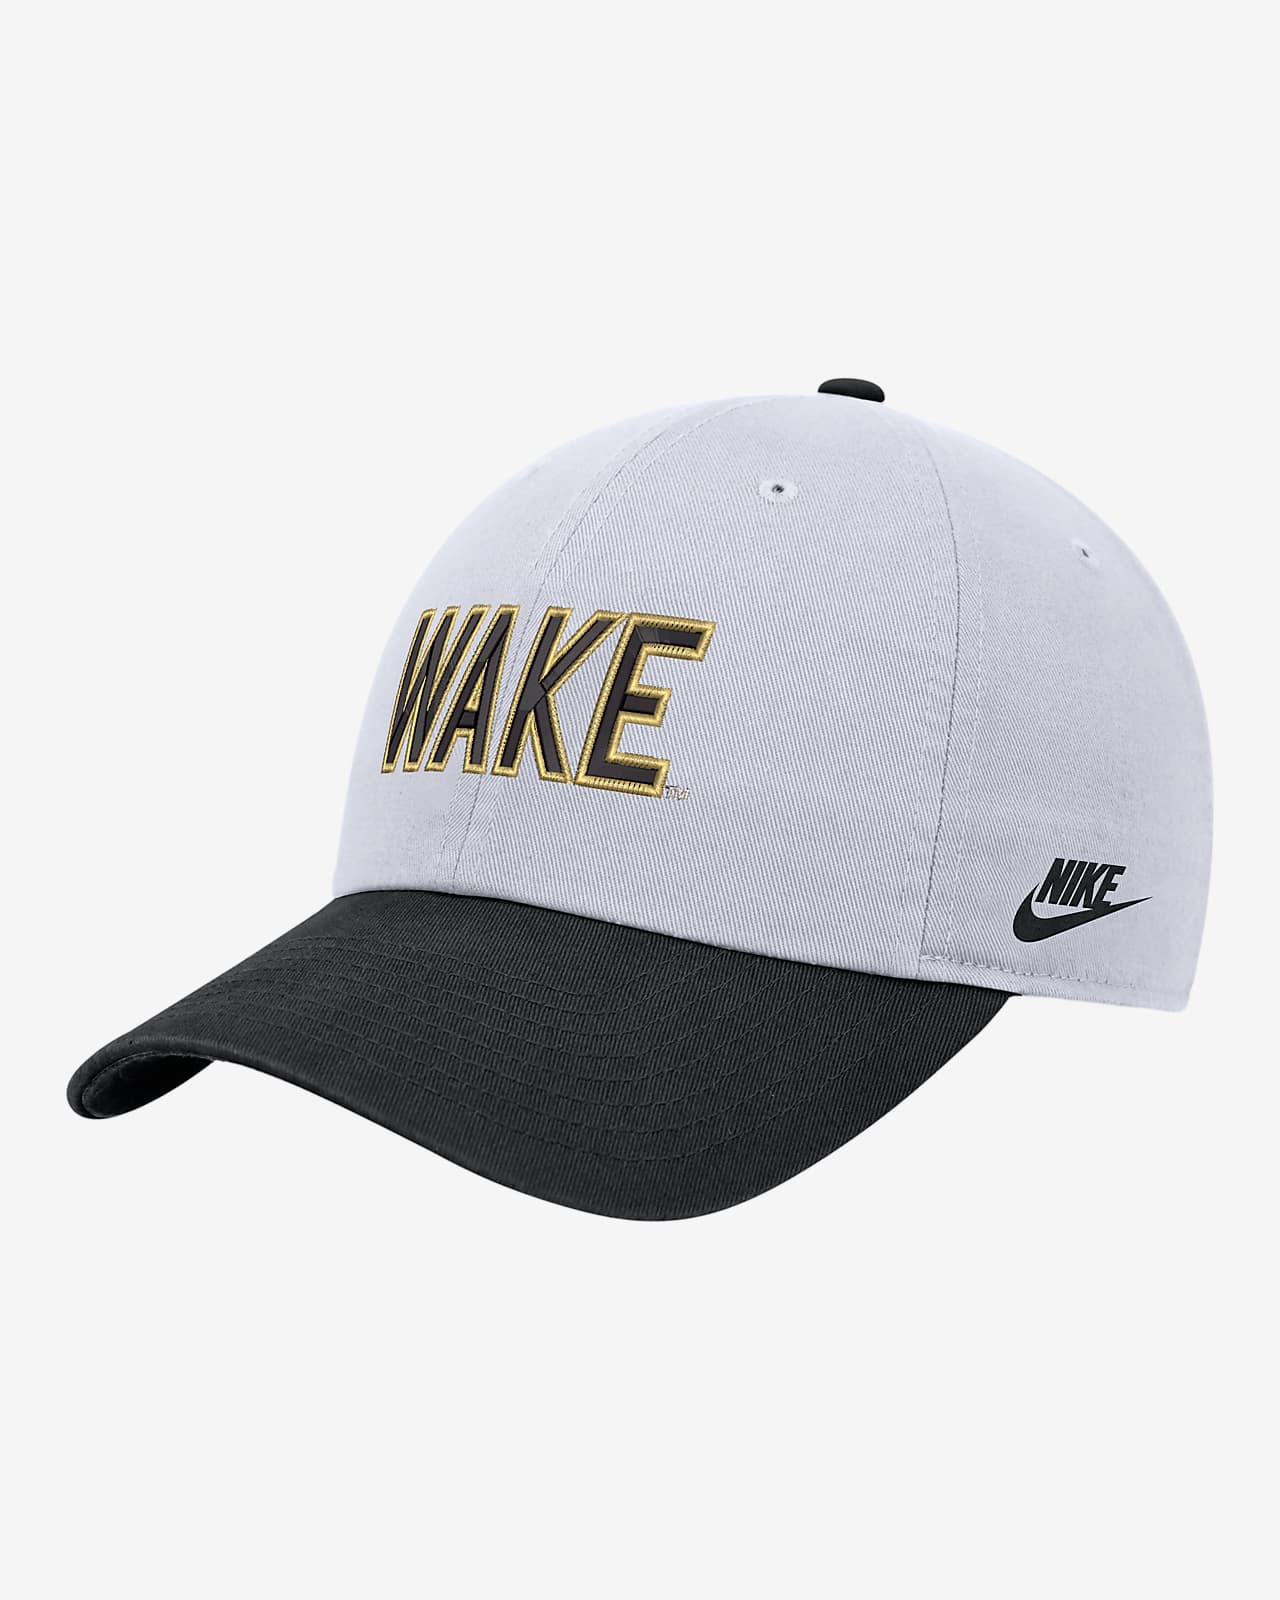 Gorra universitaria Nike Campus Wake Forest